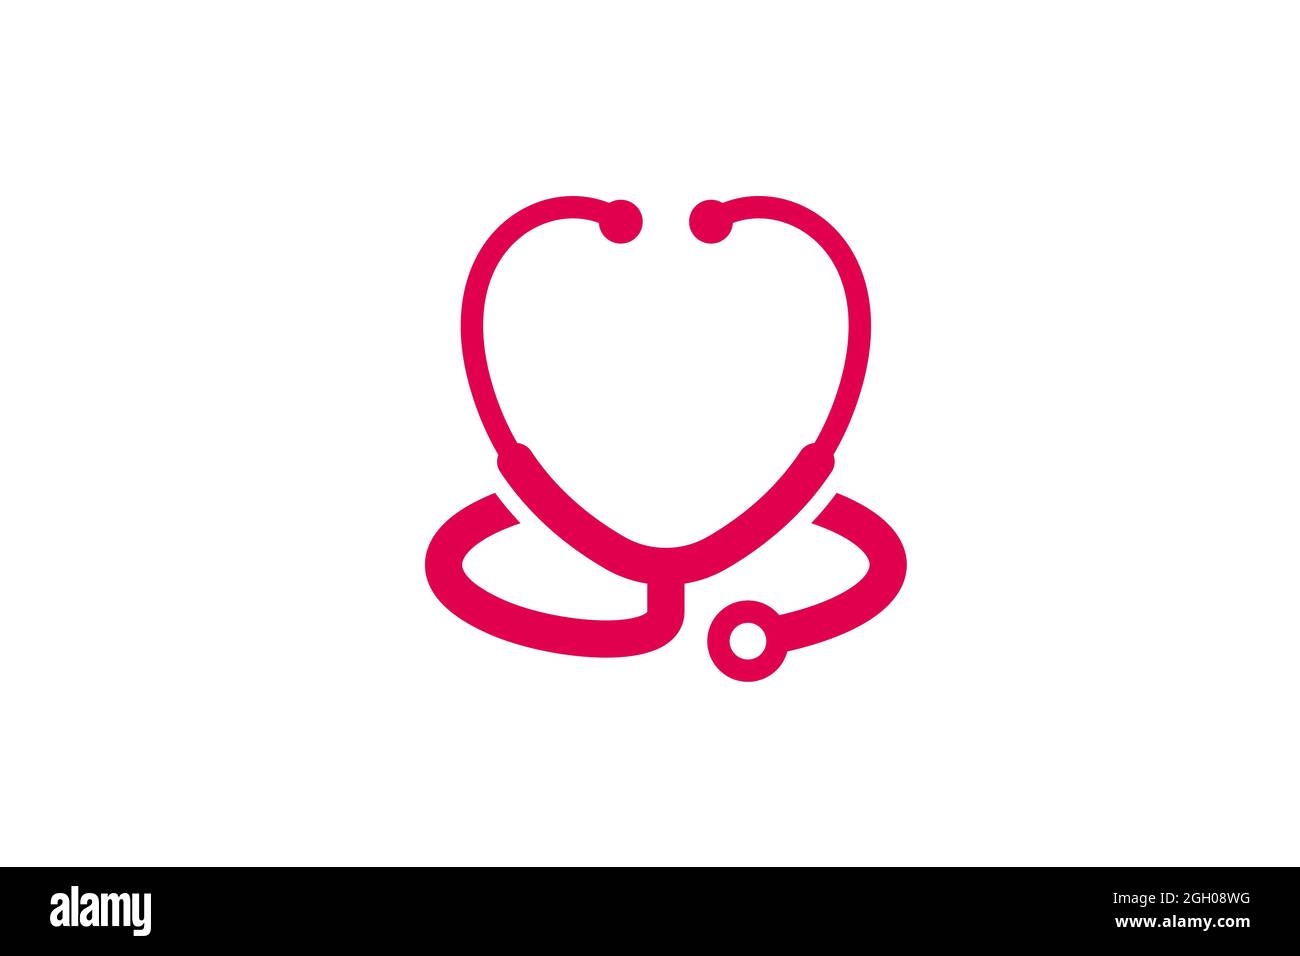 Stethoscope icon with heart shape. Health and medicine symbol Stock Photo -  Alamy